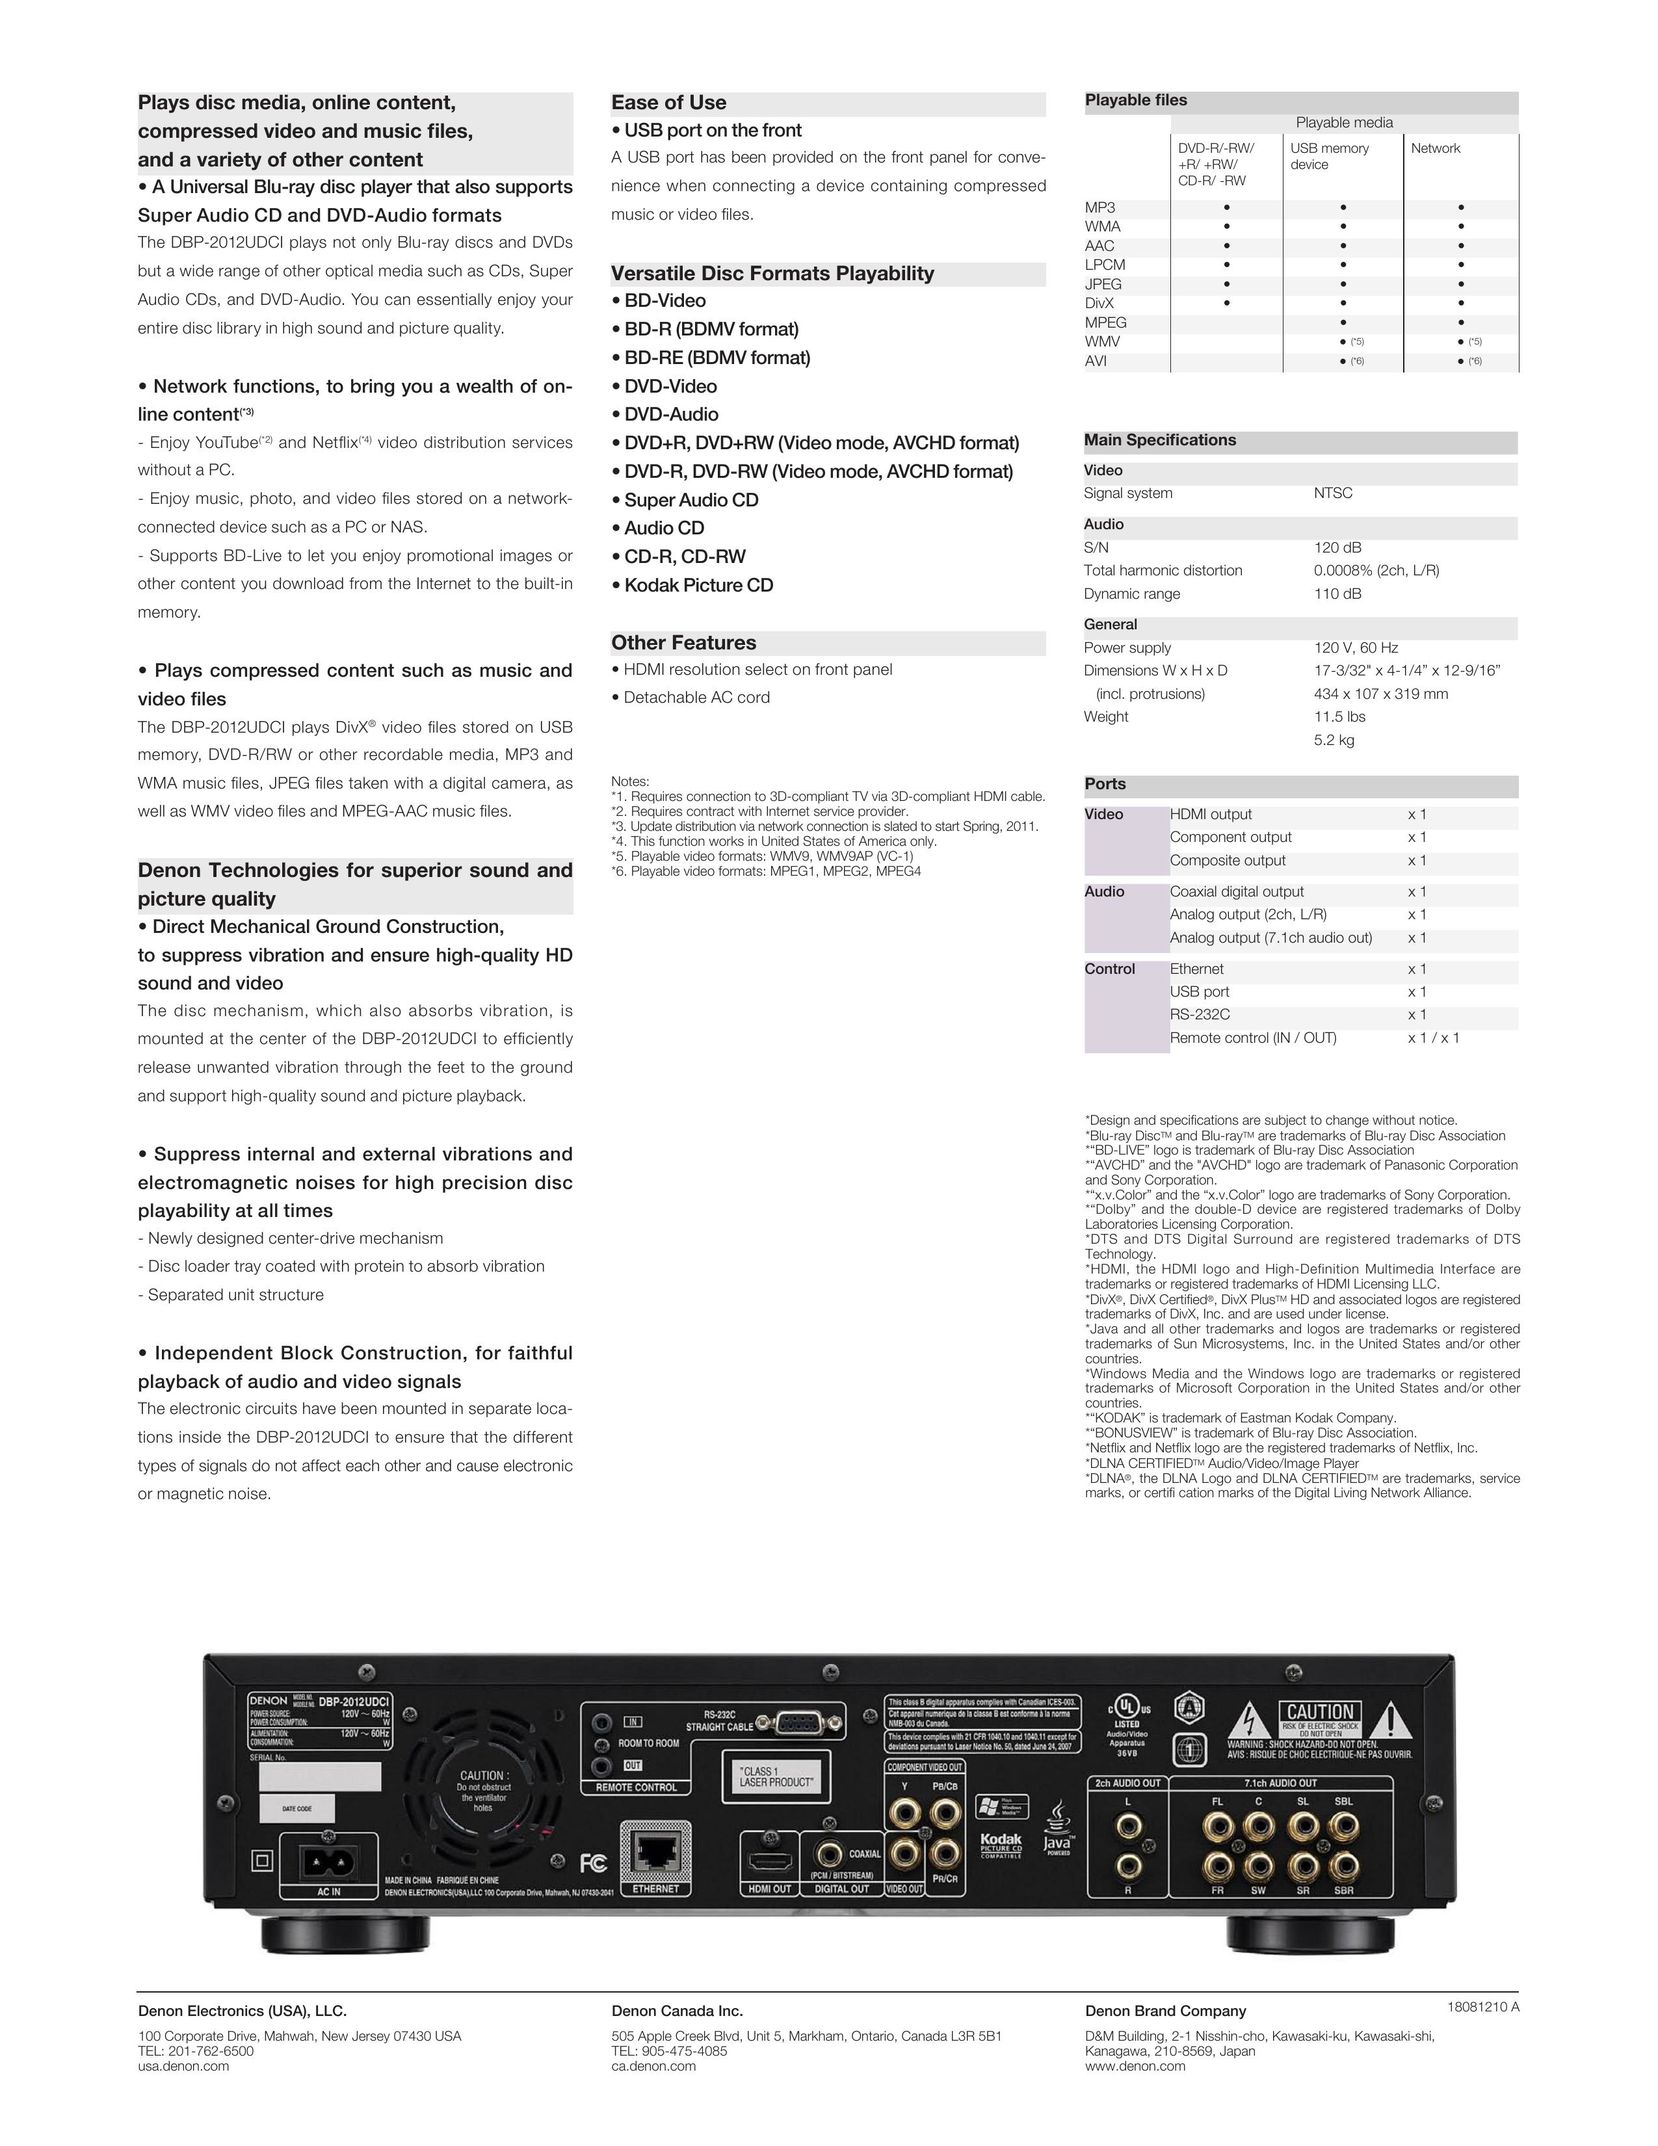 Denon DBP-2012UDCI Blu-ray Player User Manual (Page 2)